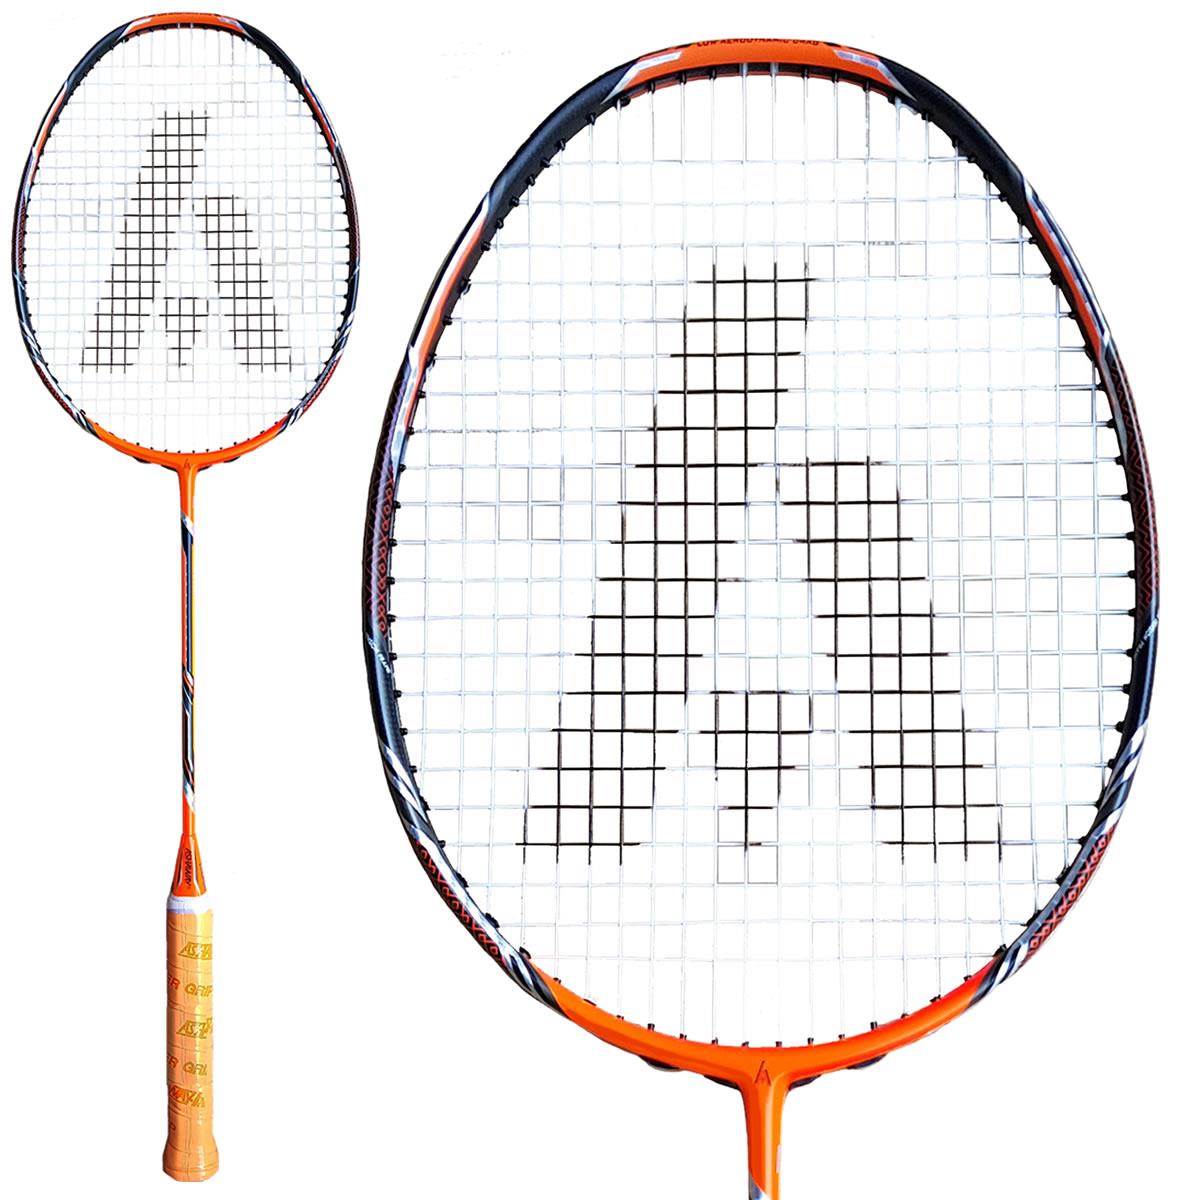 Ashaway Phantom X Fire II Badminton Racket